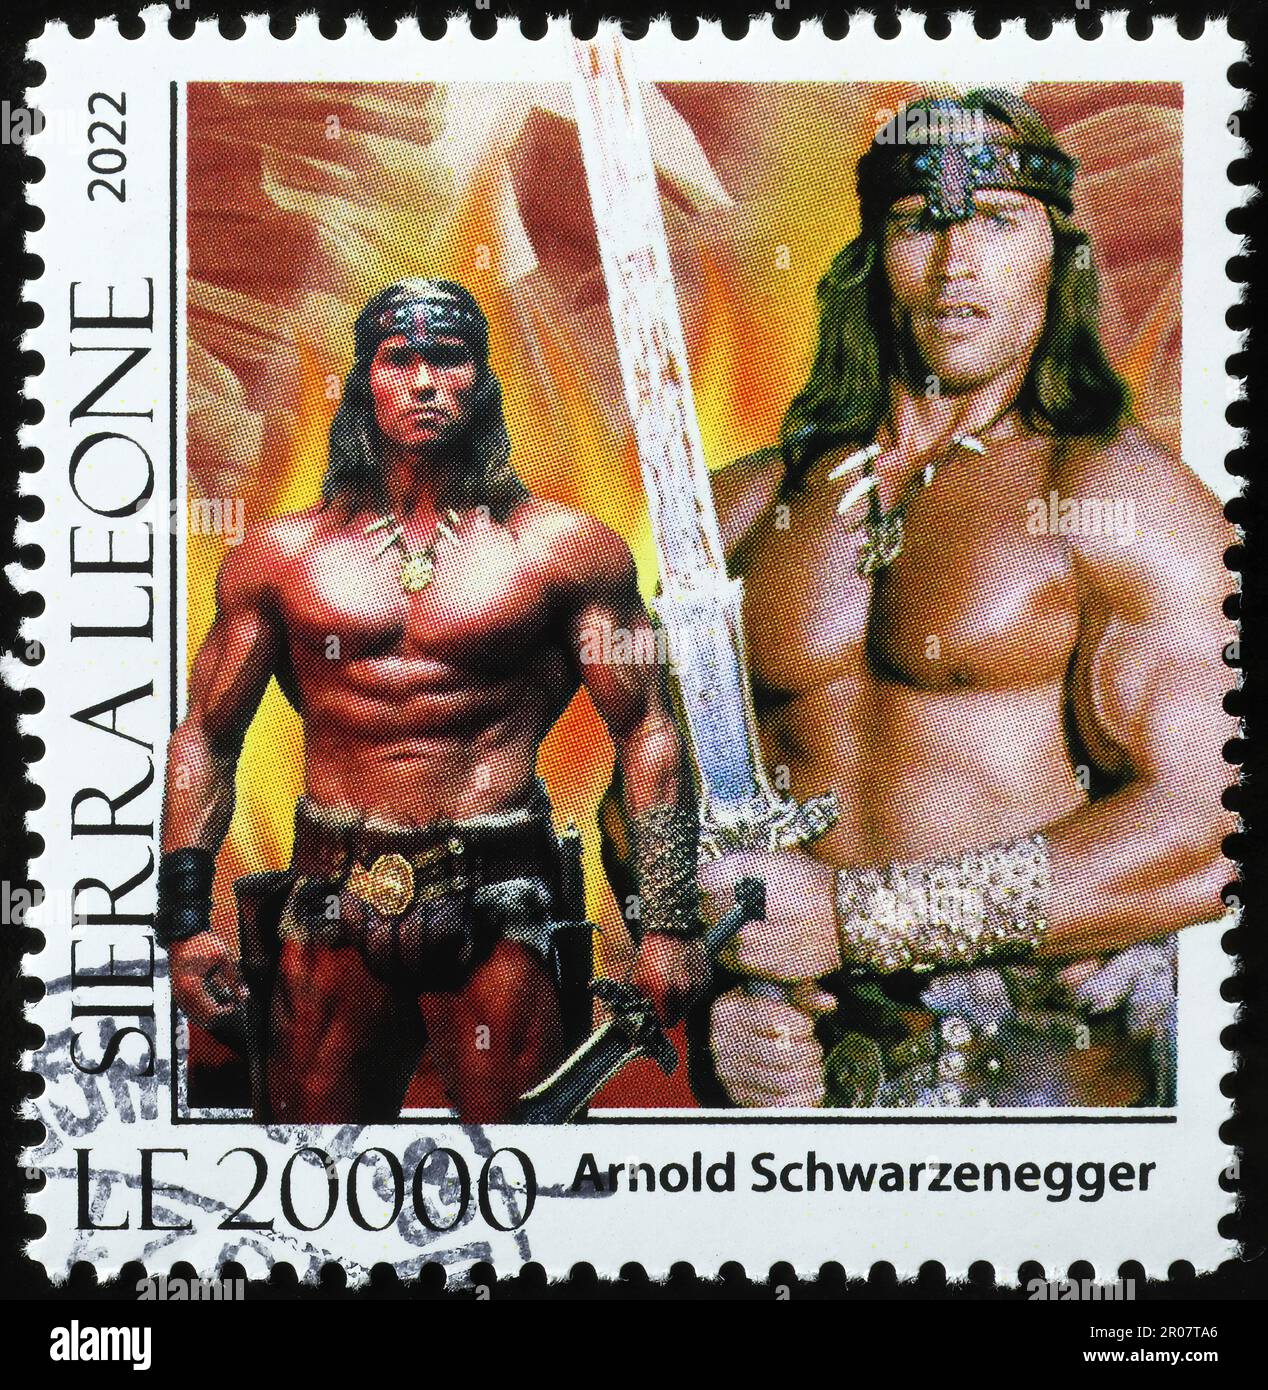 Arnold Schwarzenegger as Conan the Barbarian on postage stamp Stock Photo